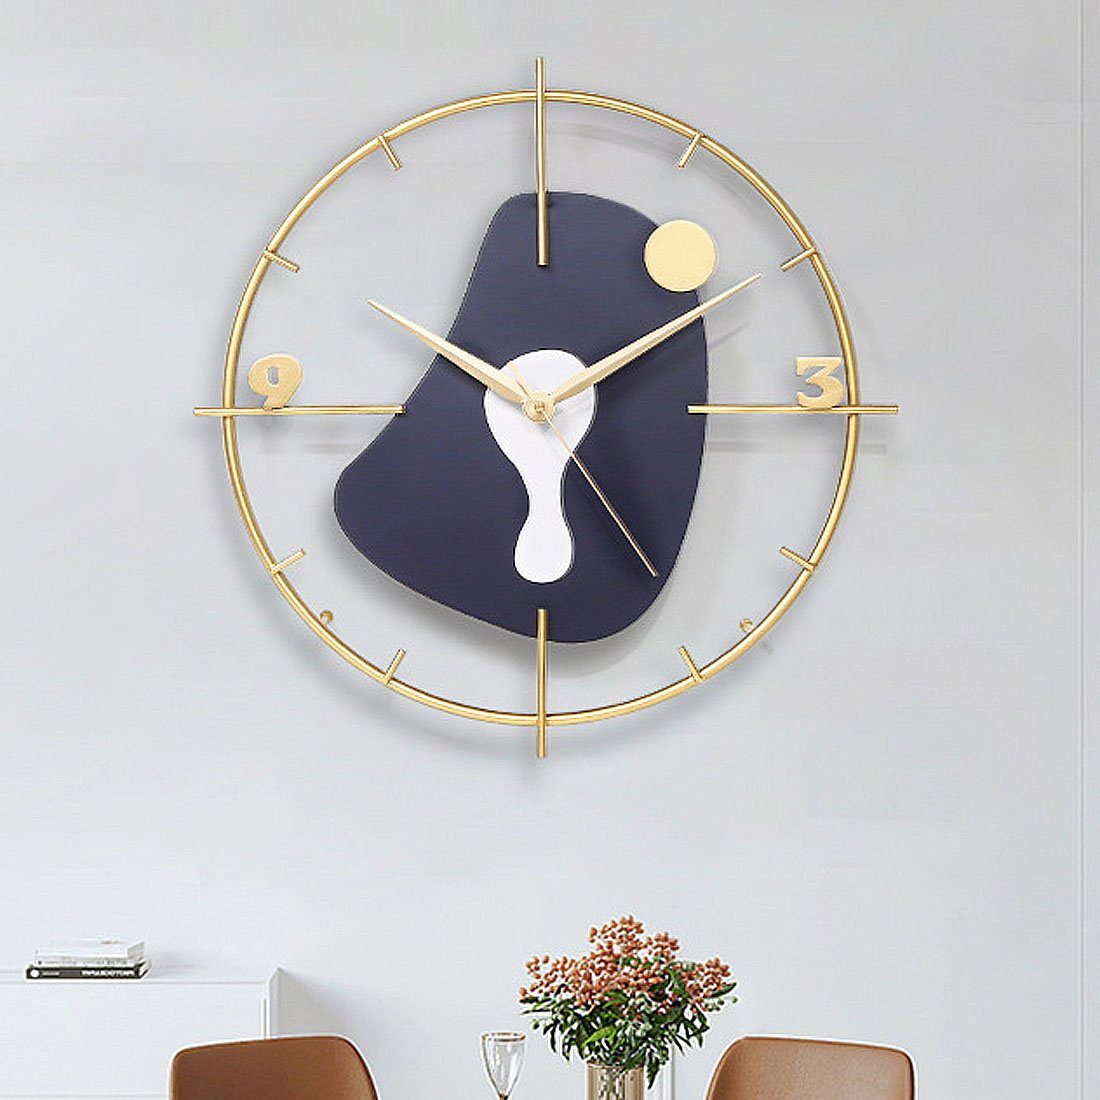 Wanduhr Uhr,dekorative Wanduhr, stilvolle einfache DÖRÖY 46cm Wanduhr stille Moderne